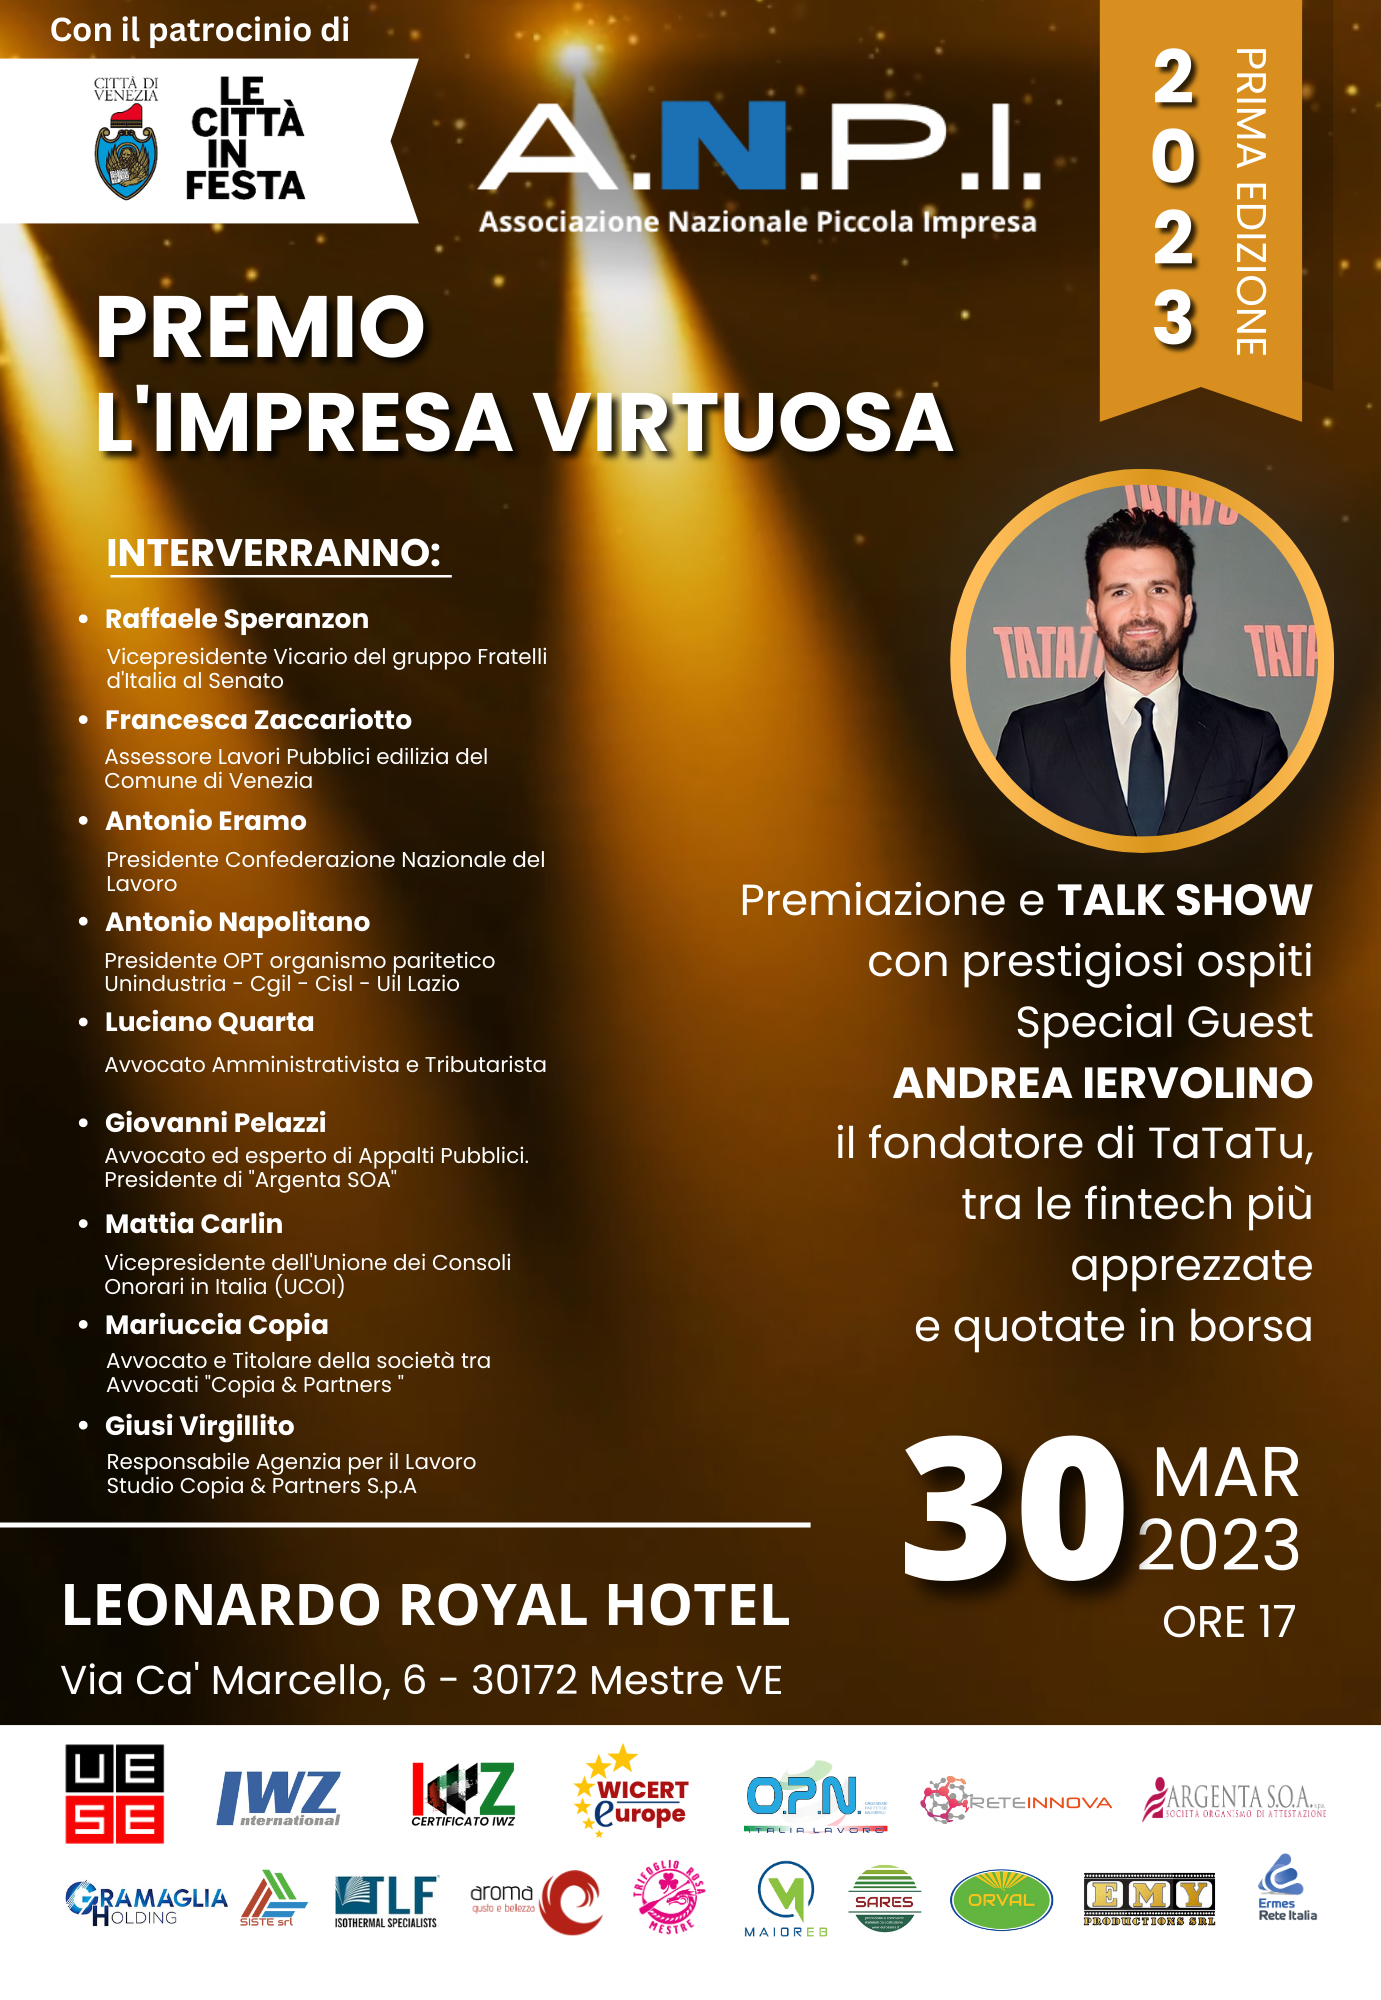 Premio "L'Impresa Virtuosa" : Special Guest Andrea Iervolino founder di TaTaTu